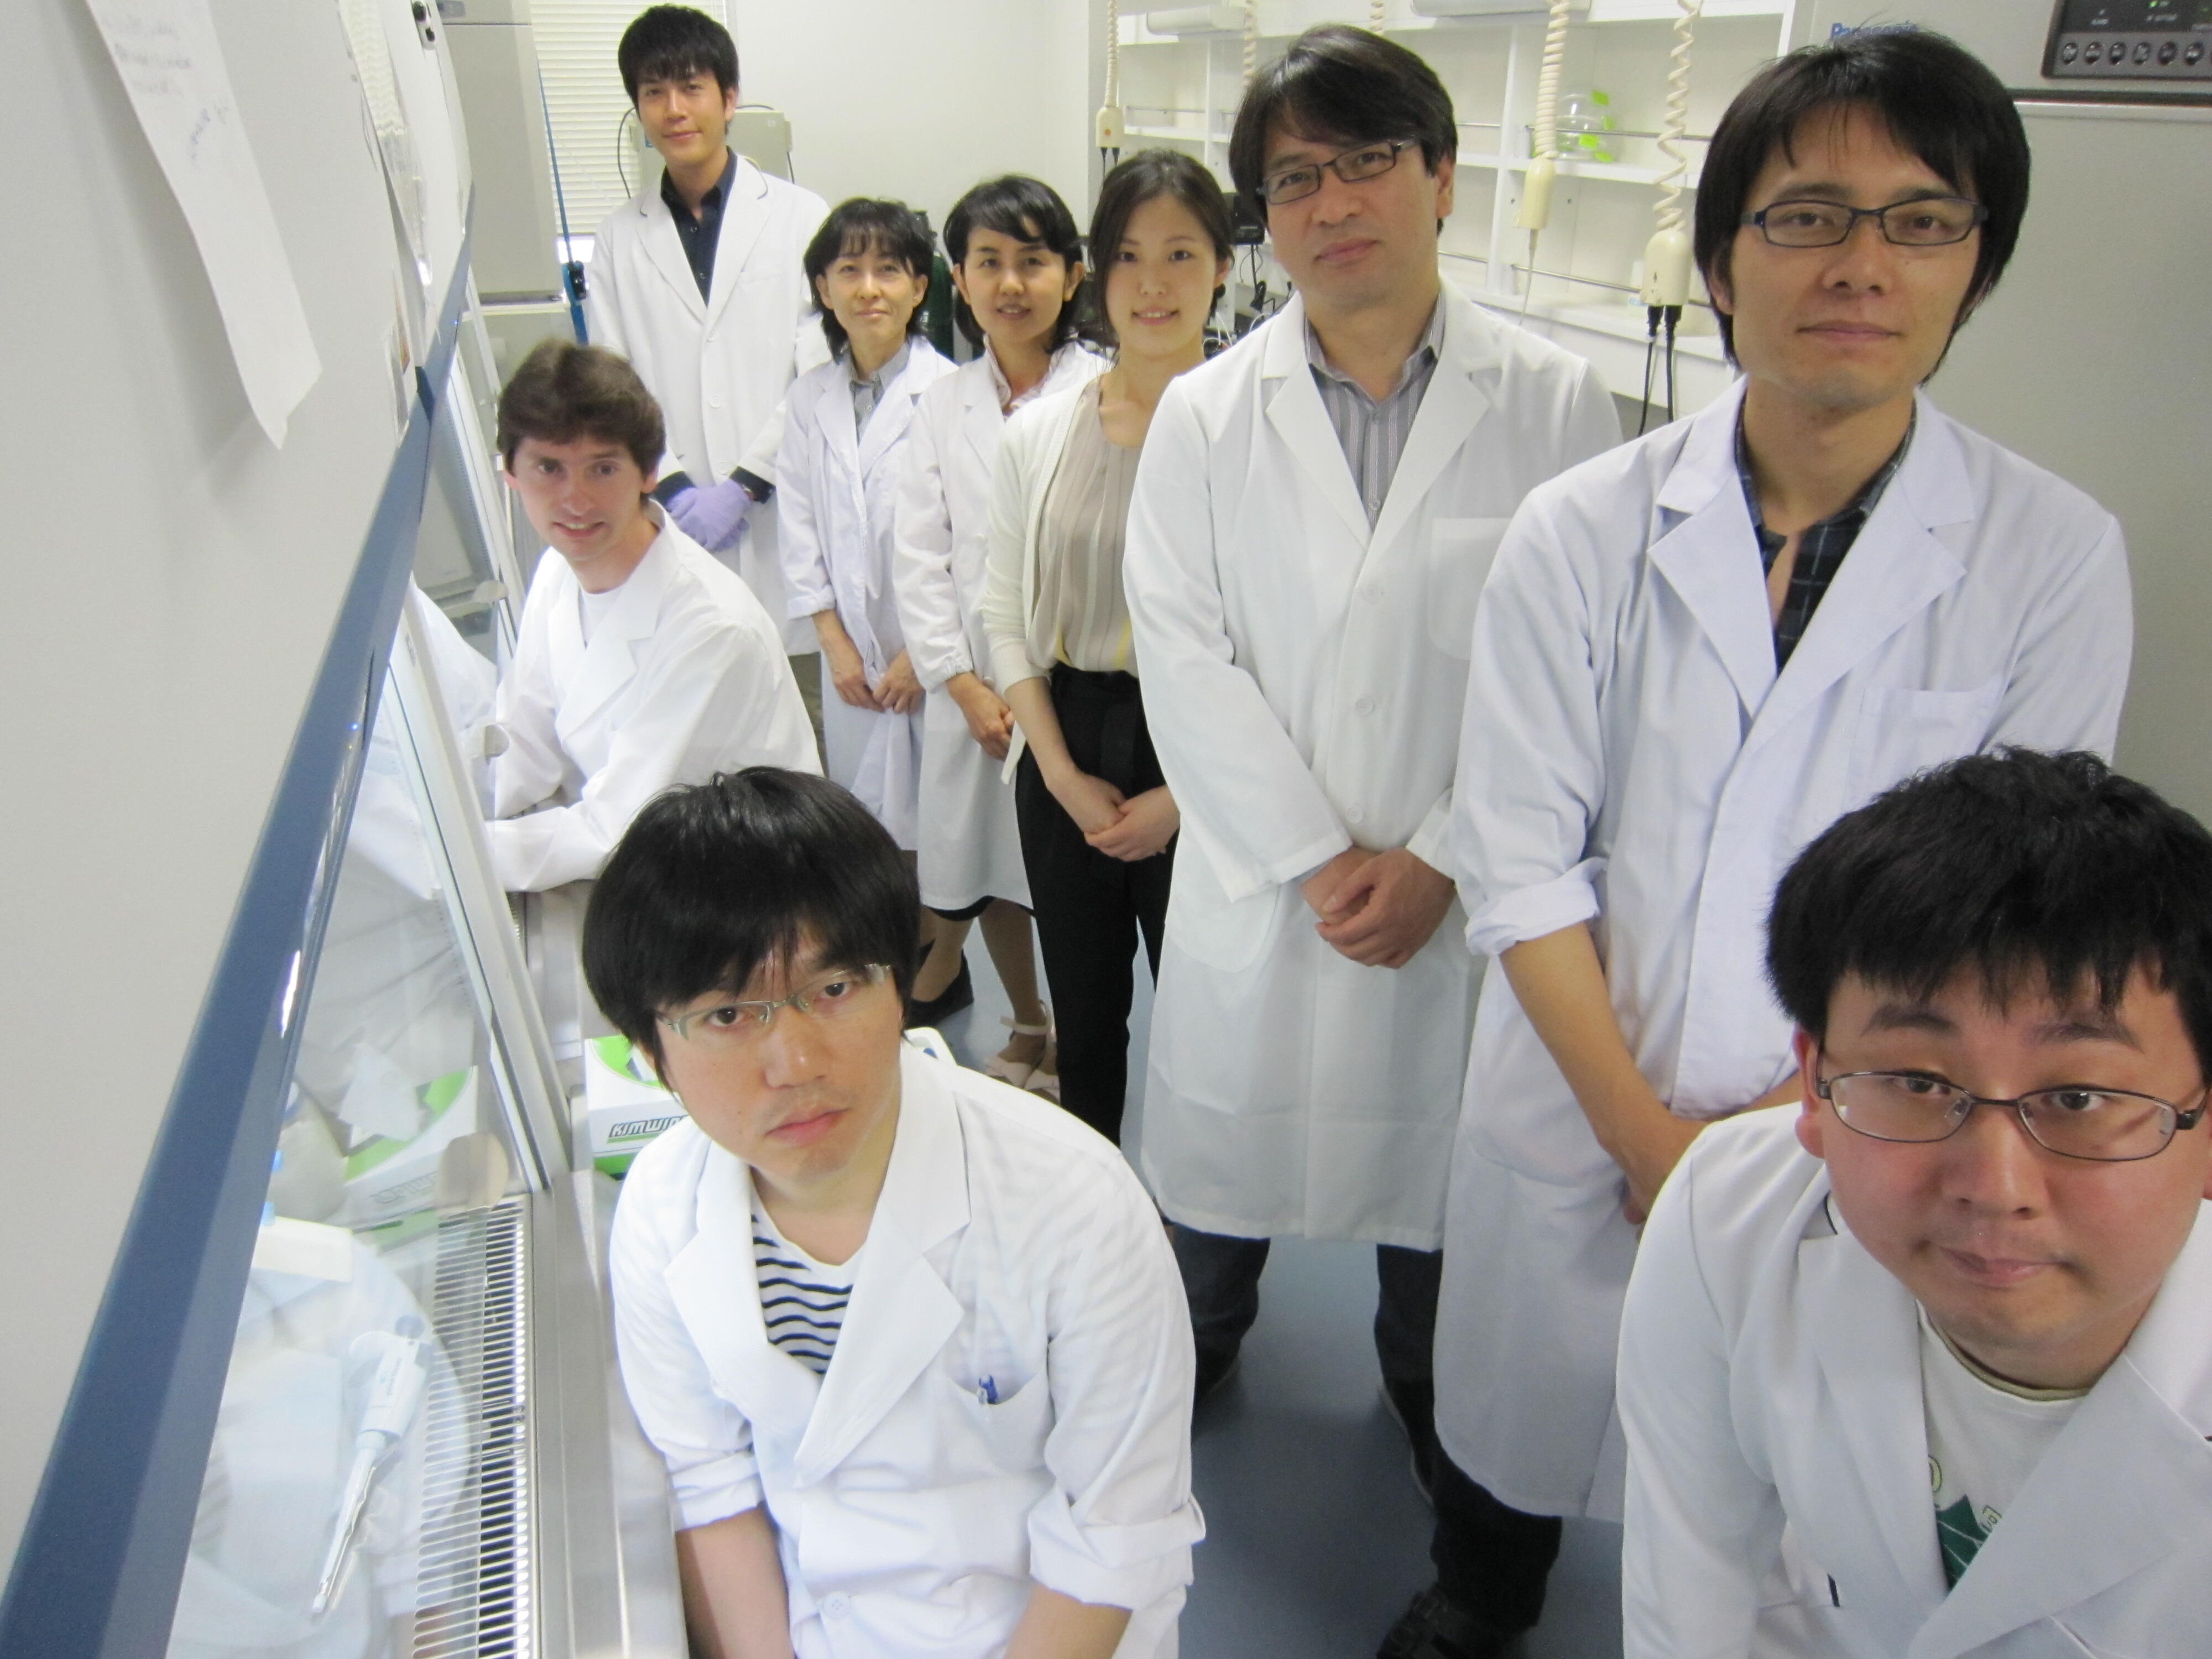 307_Dr.Nishikawa and colleagues.jpg